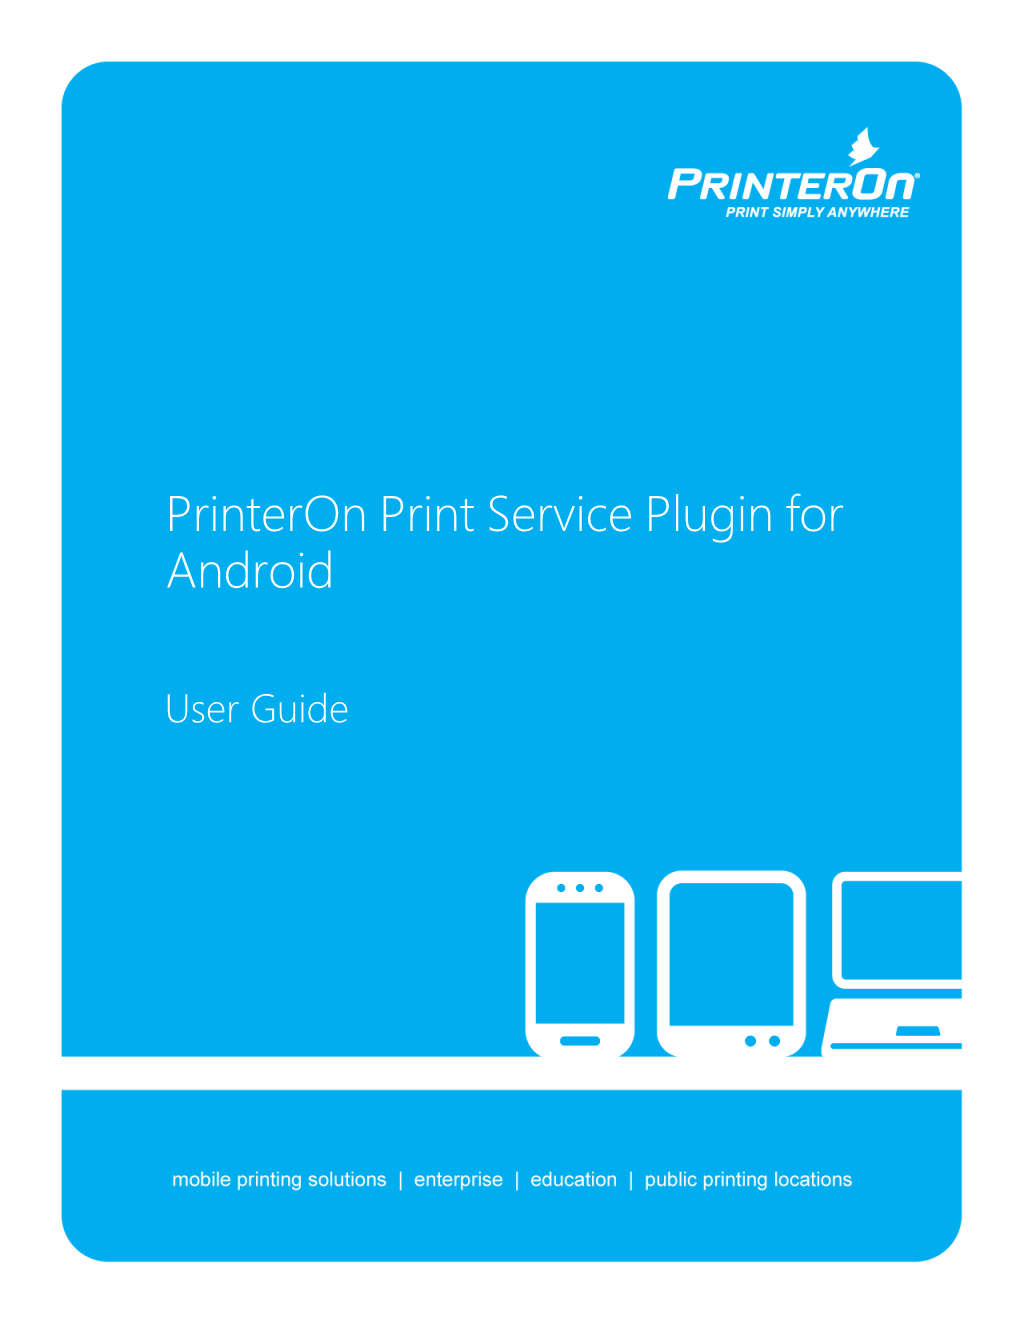 Printeron Print Service Plugin for Android